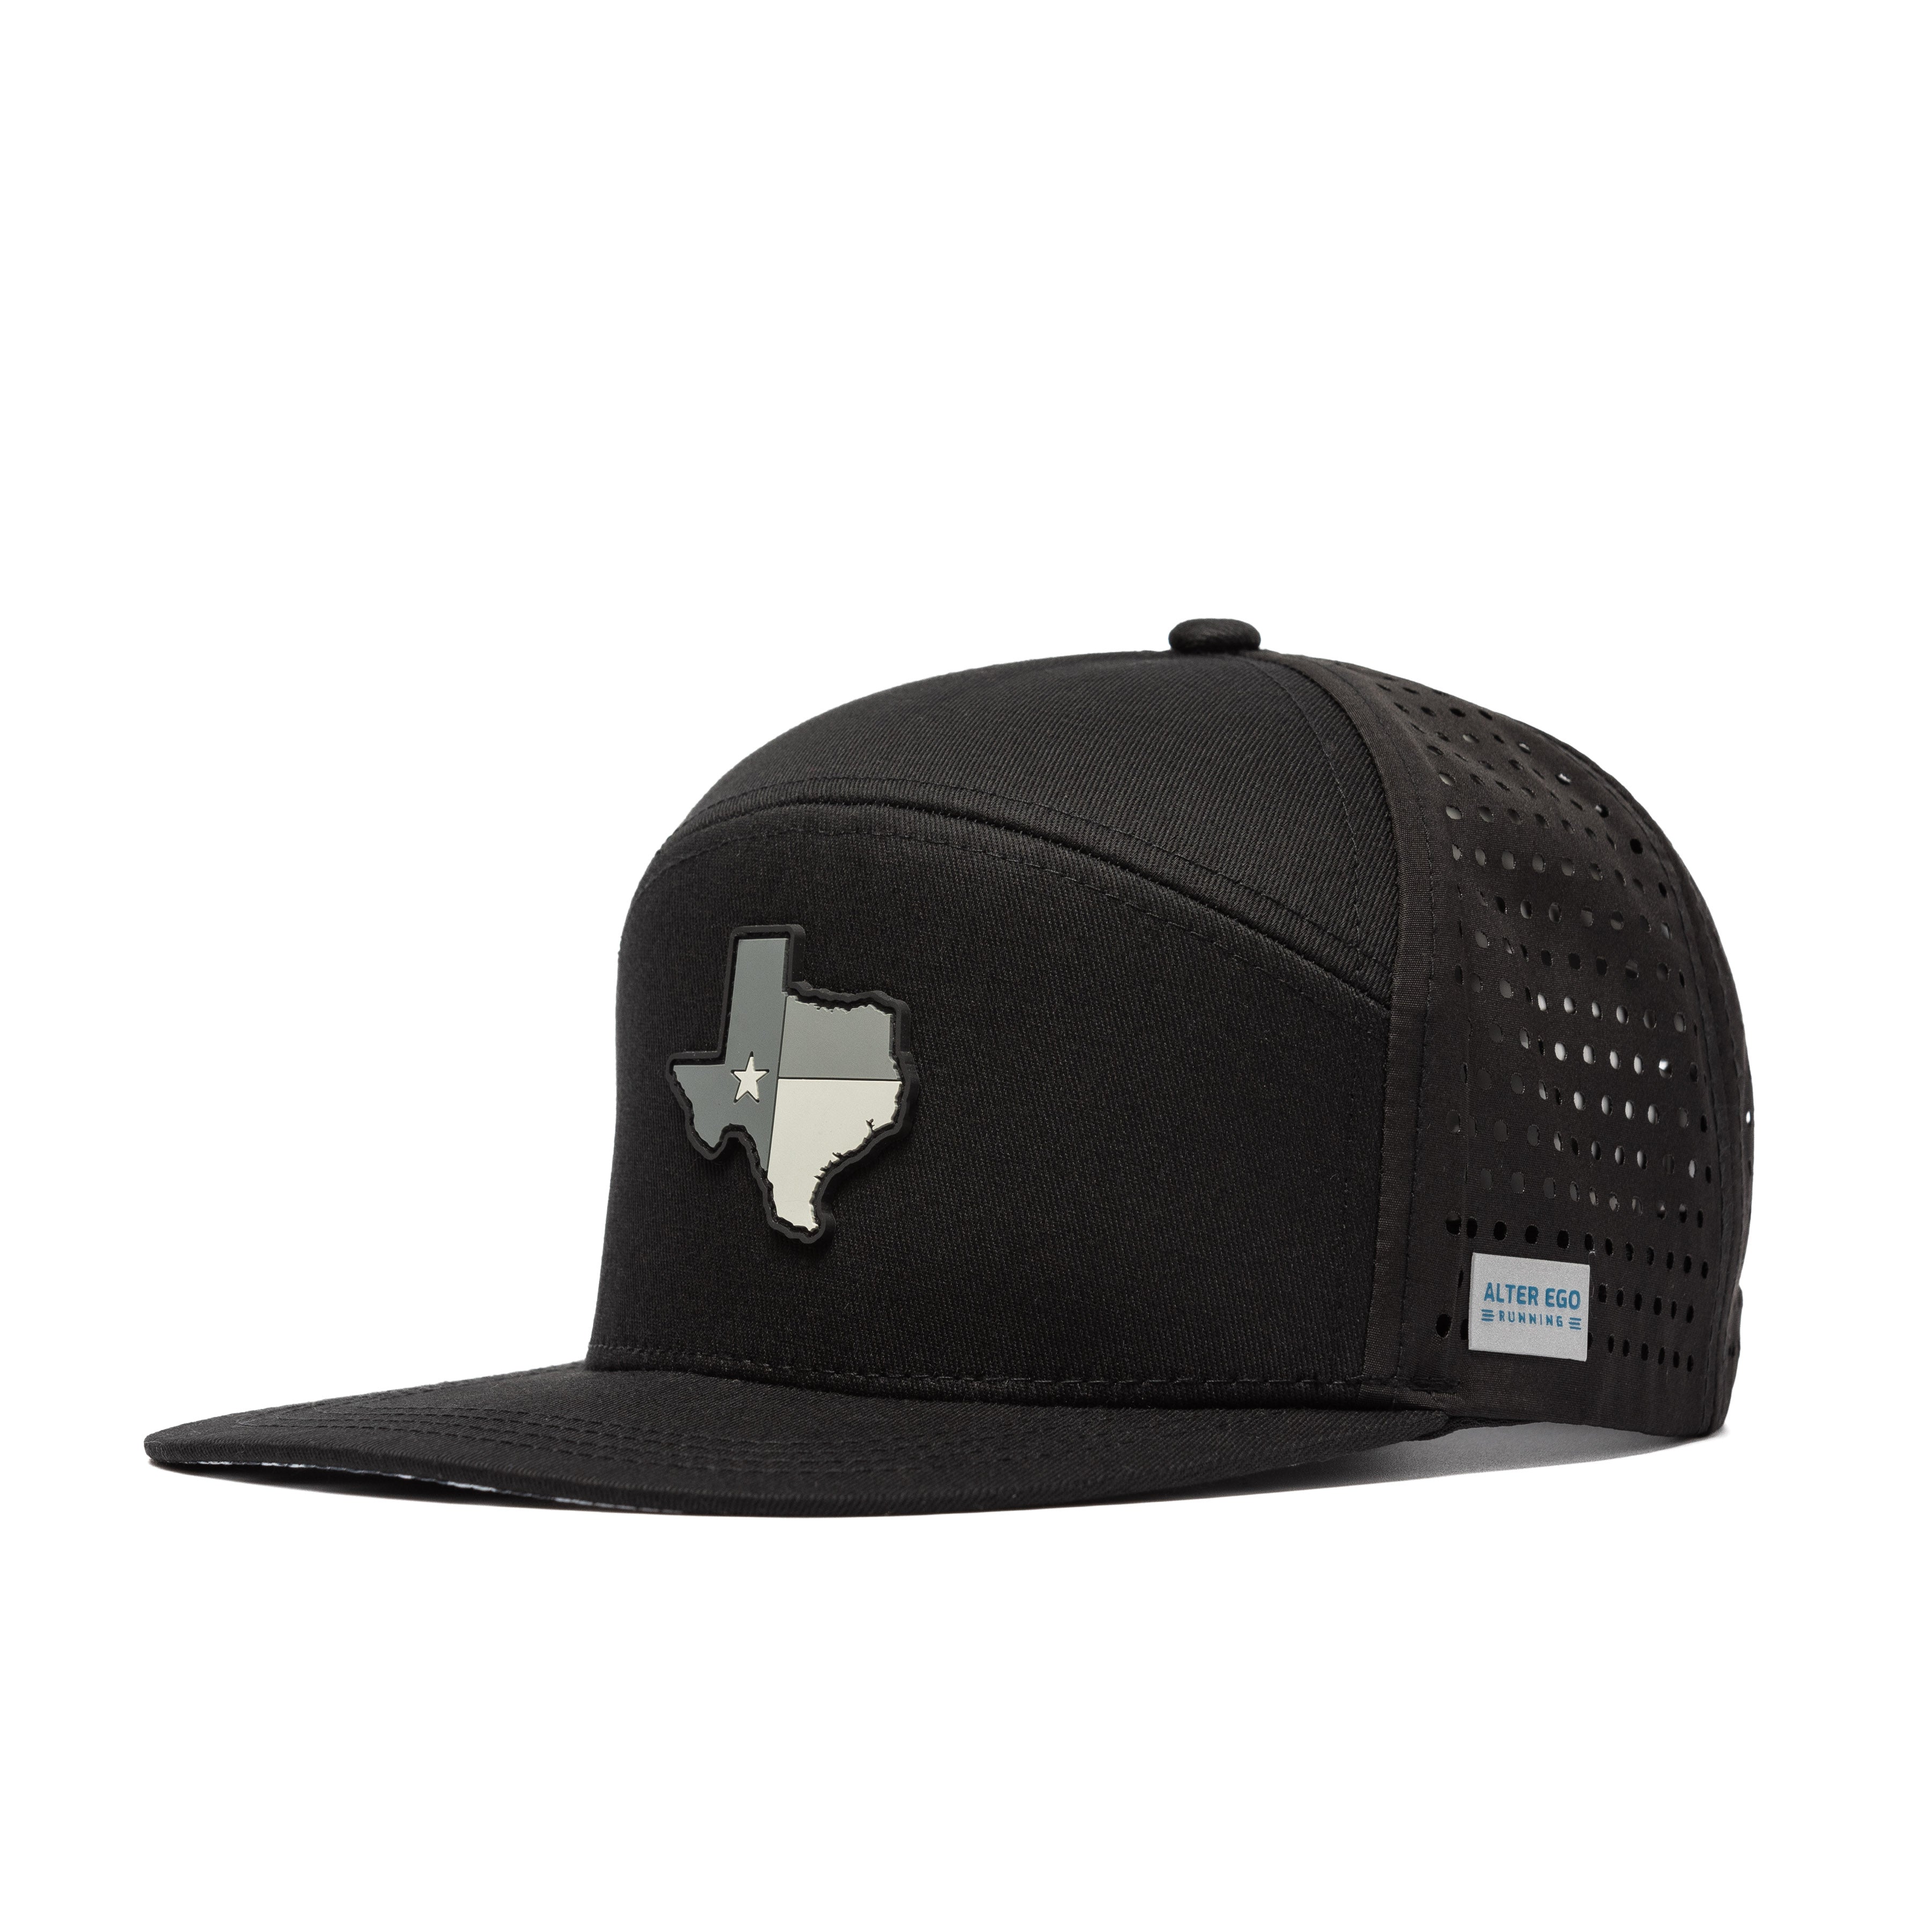 Alterego Drifter Splash Texas Black Hat